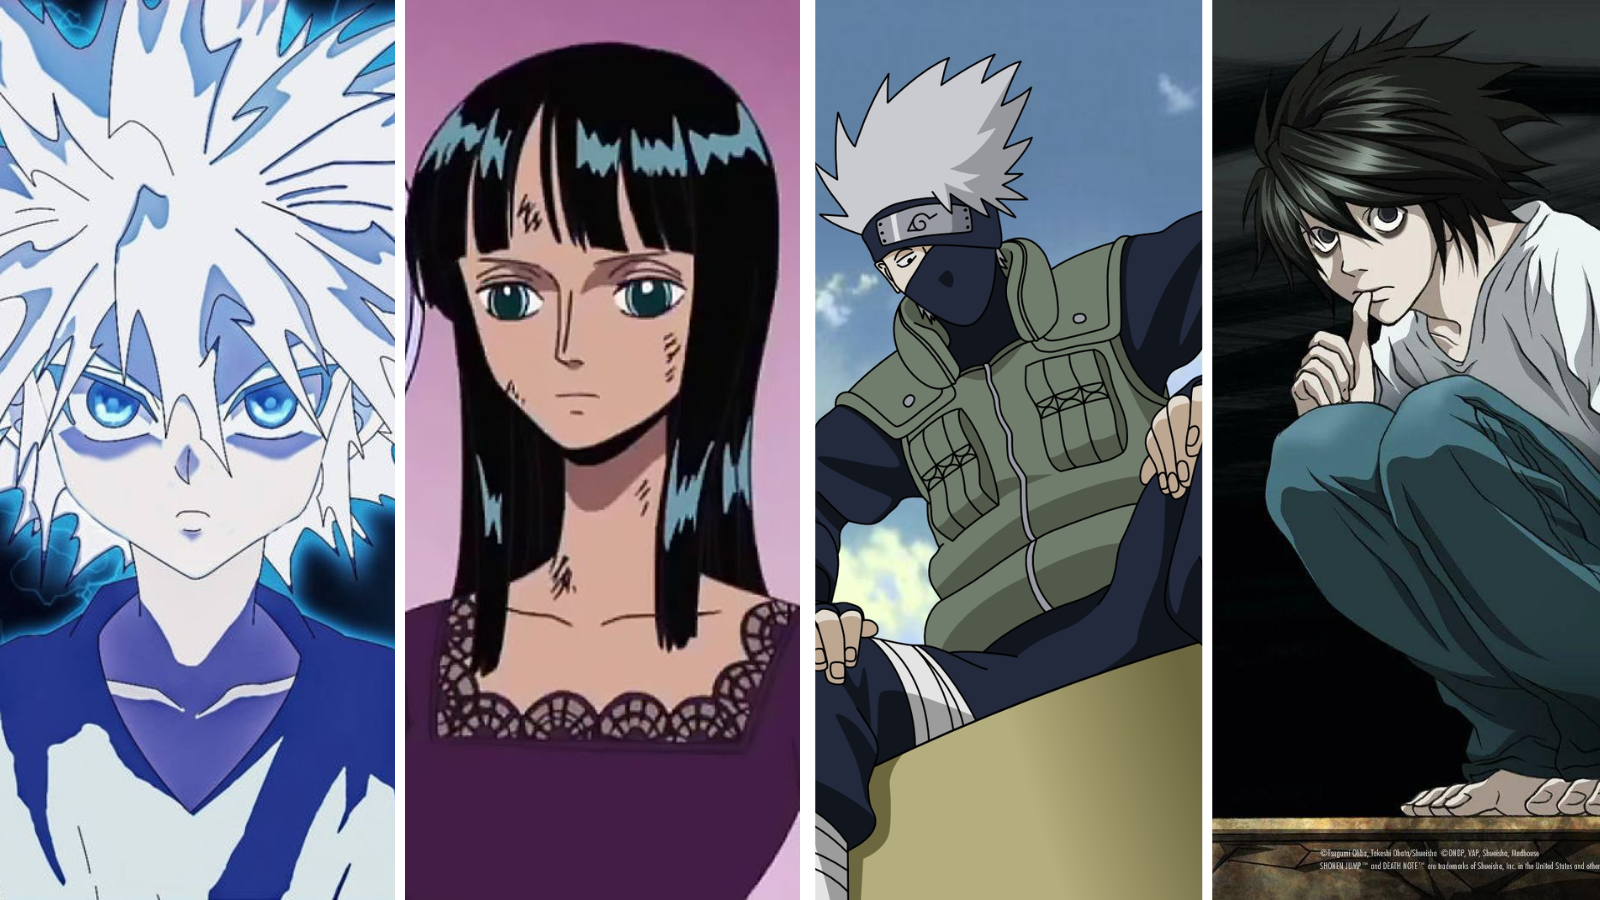 10 Amazing ENFJ Anime Characters - Psychology Junkie